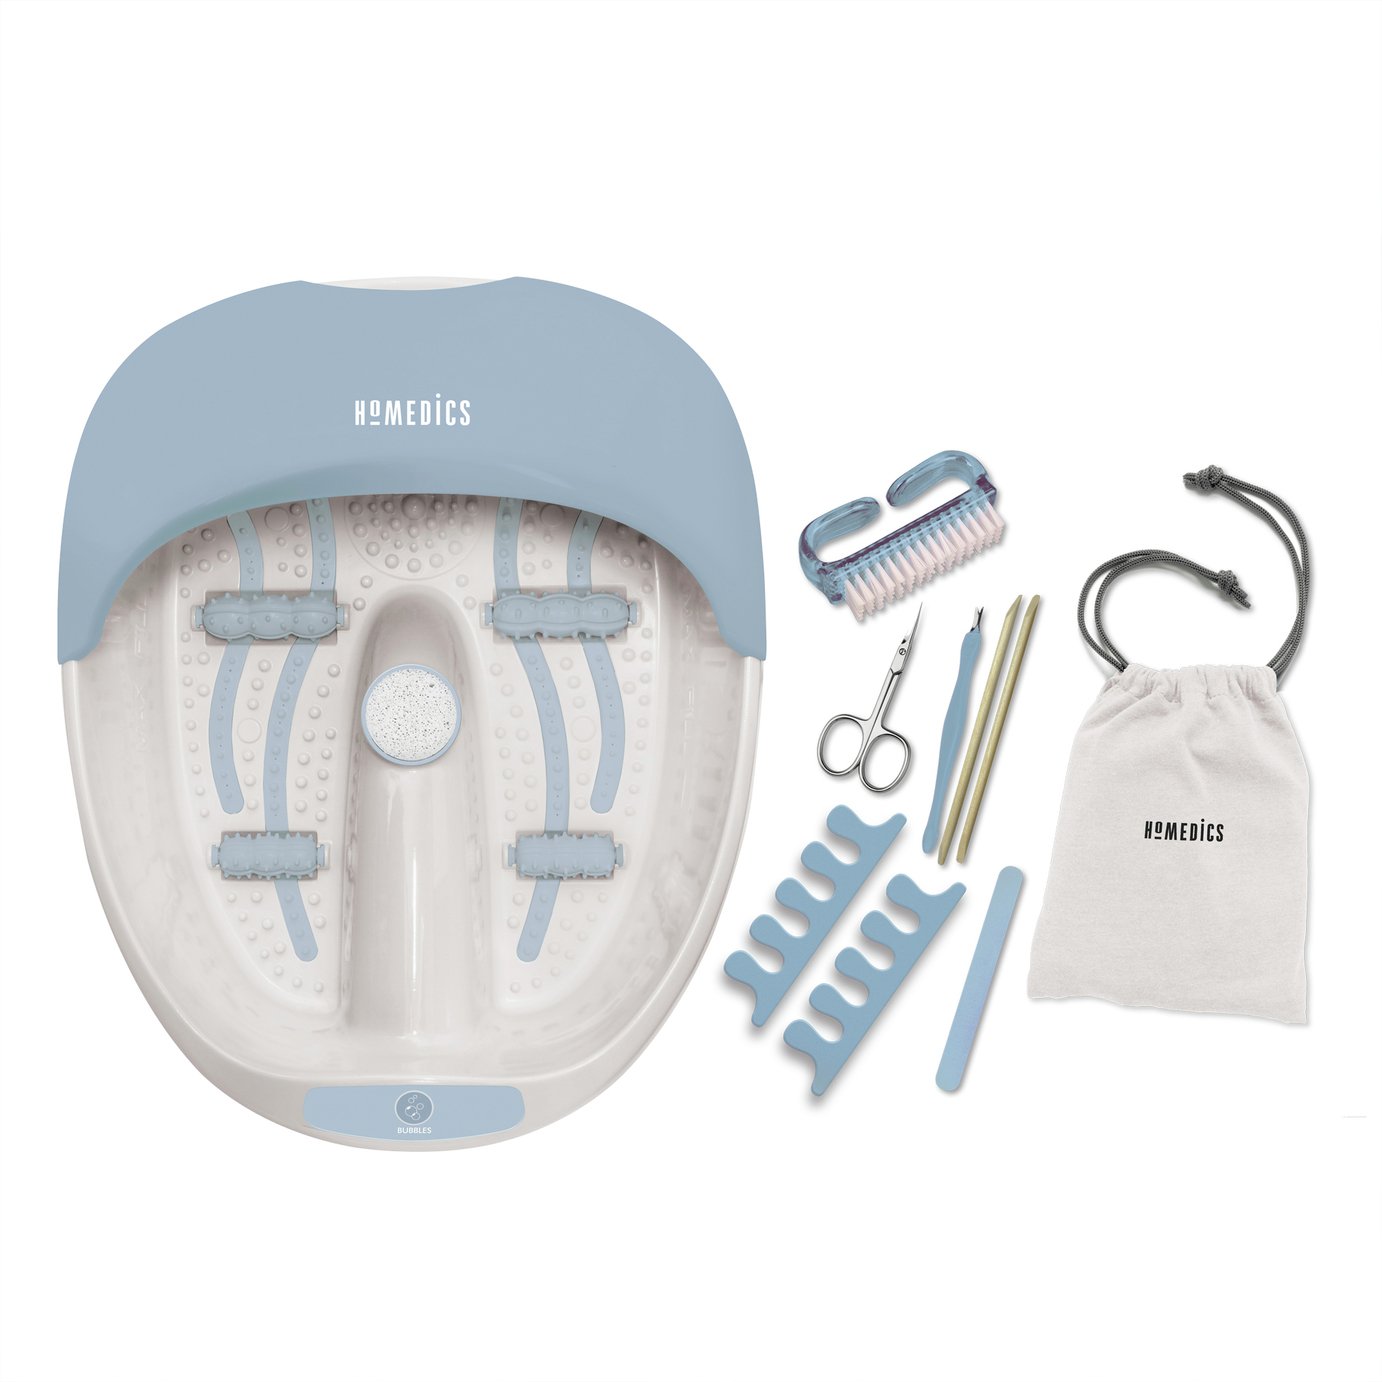 HoMedics Blue Luxury Nail Care Footspa Kit